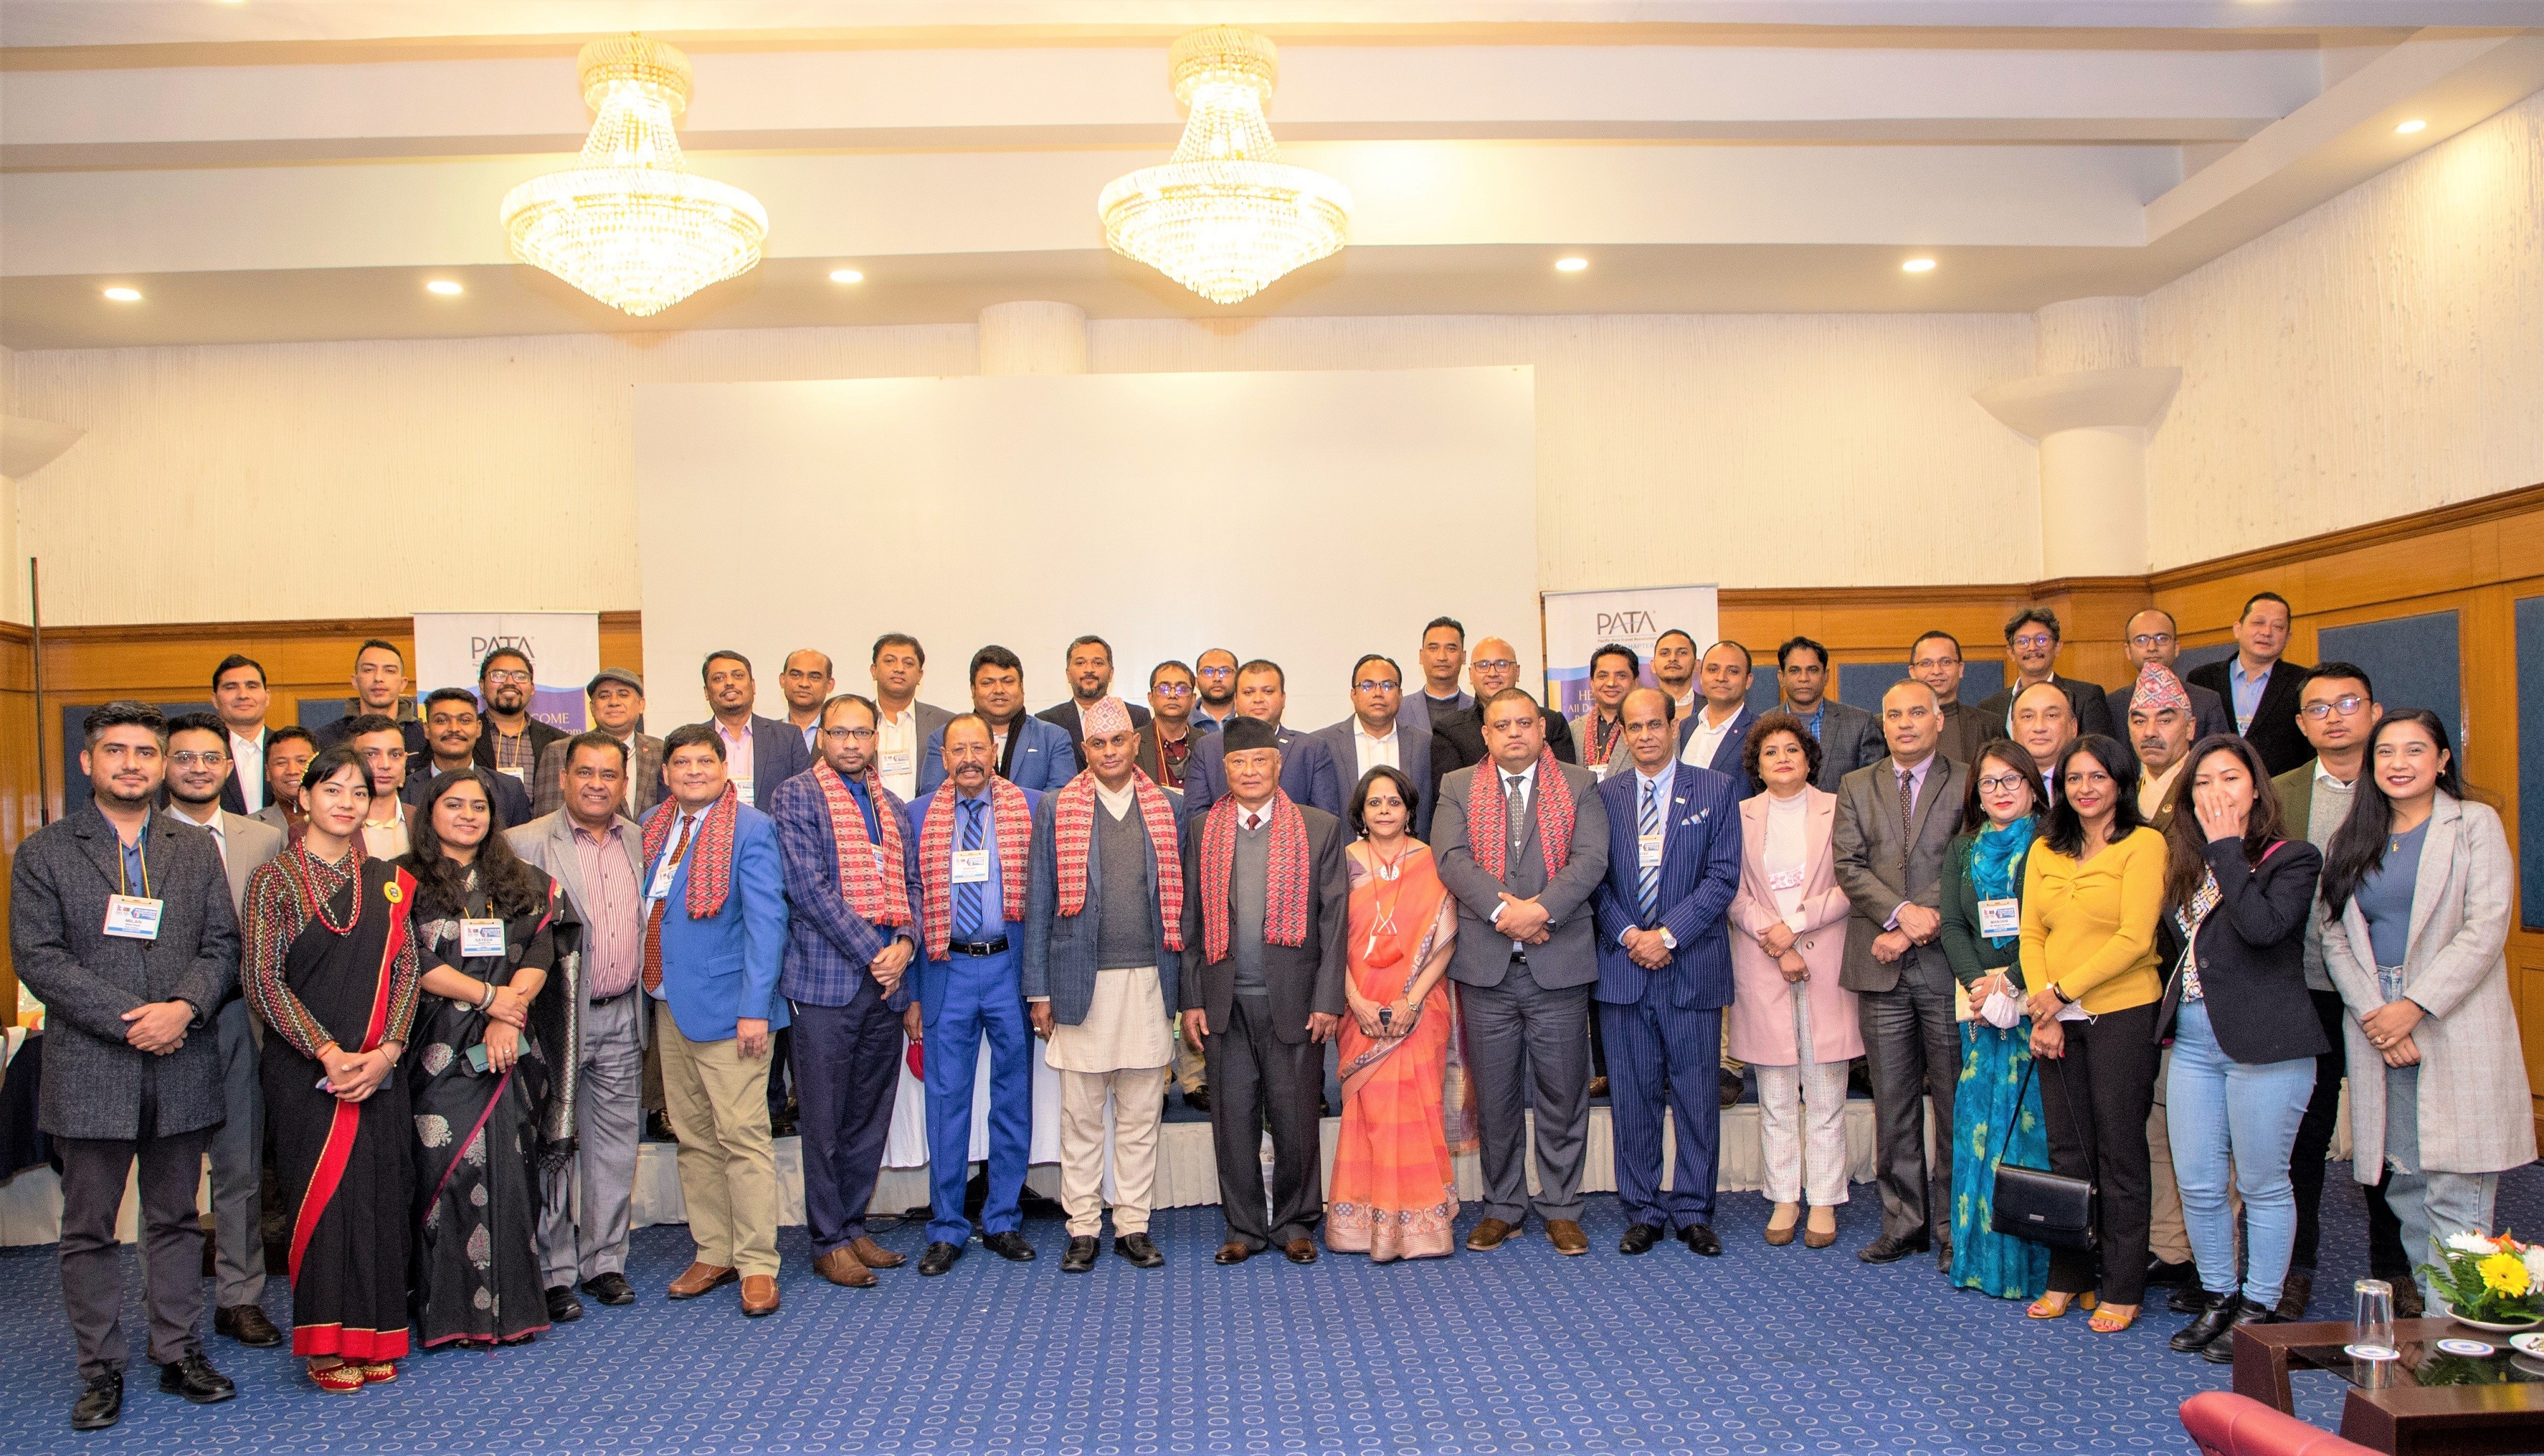 PATA Nepal organizes “Nepal- Bangladesh Tourism Promotion and B2B Exchange” Program in Kathmandu